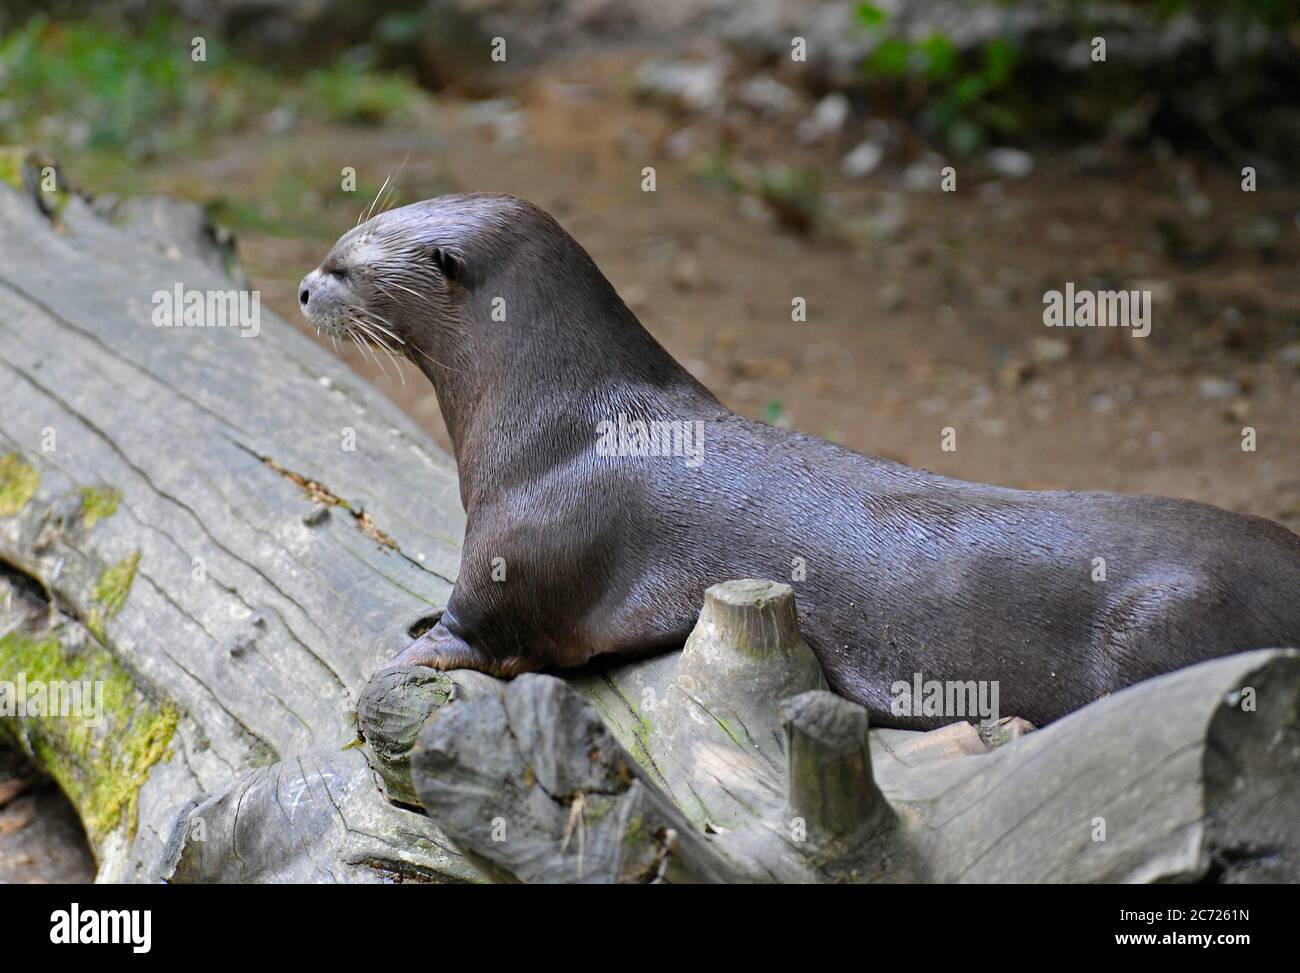 Giant river otter Stock Photo